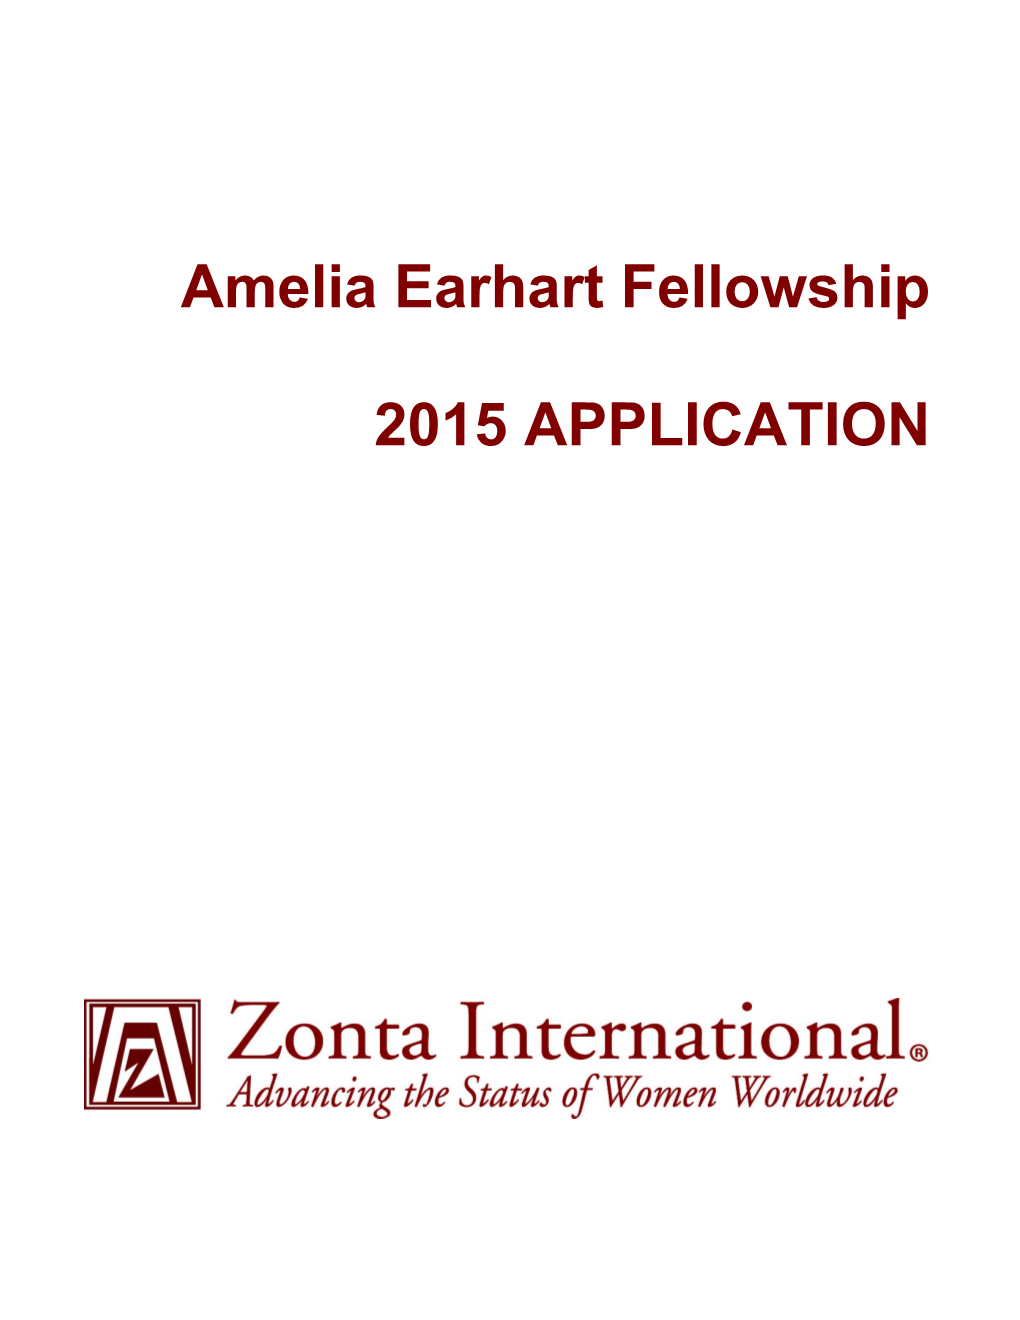 Application for Zonta International Amelia Earhart Fellowship